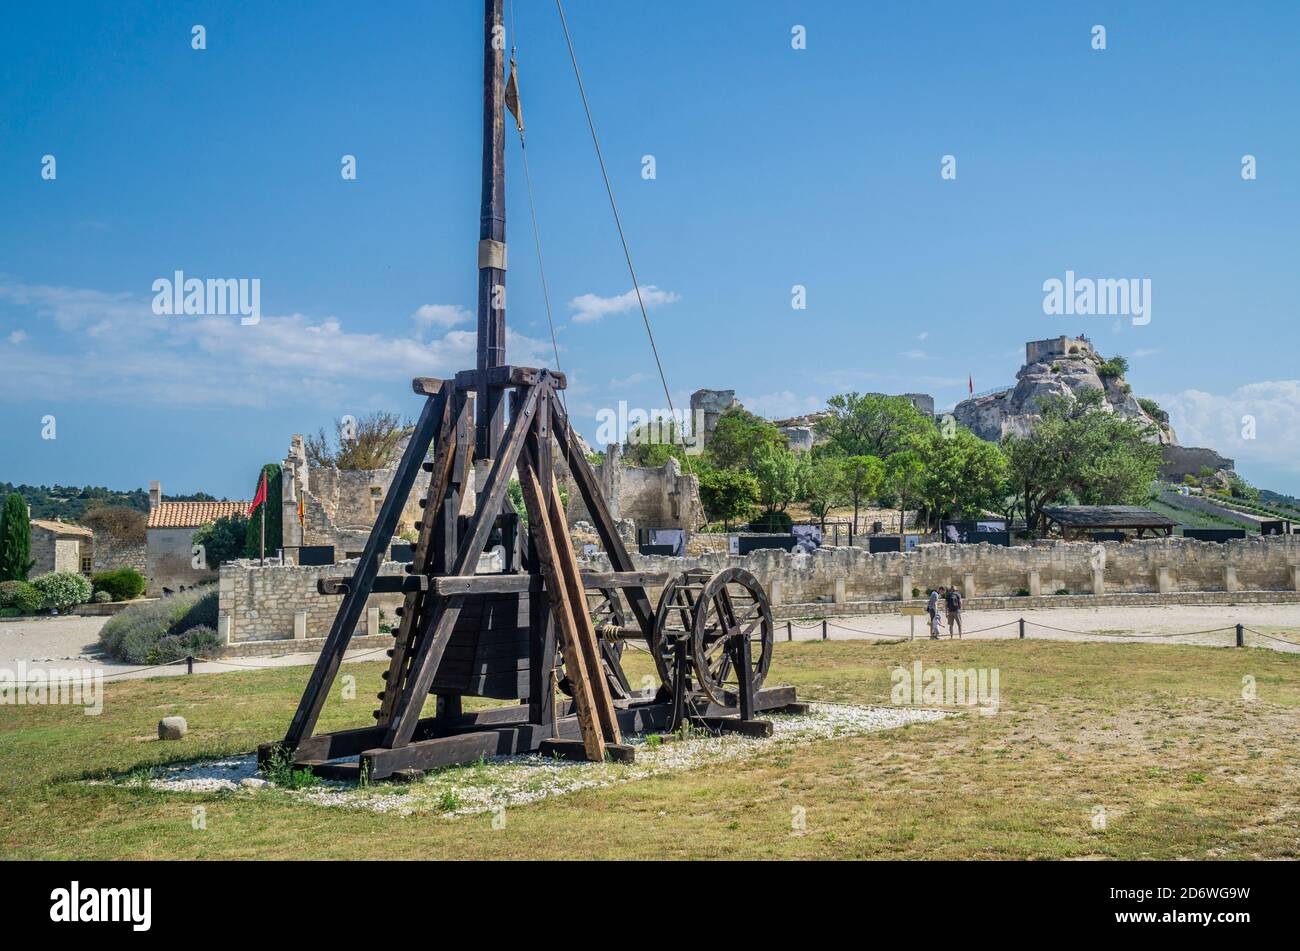 medieval trebuchet catapult siege engine displayed at the ruined castle of Château des Baux-de-Provence, Bouches-du-Rhône department, Southern France Stock Photo